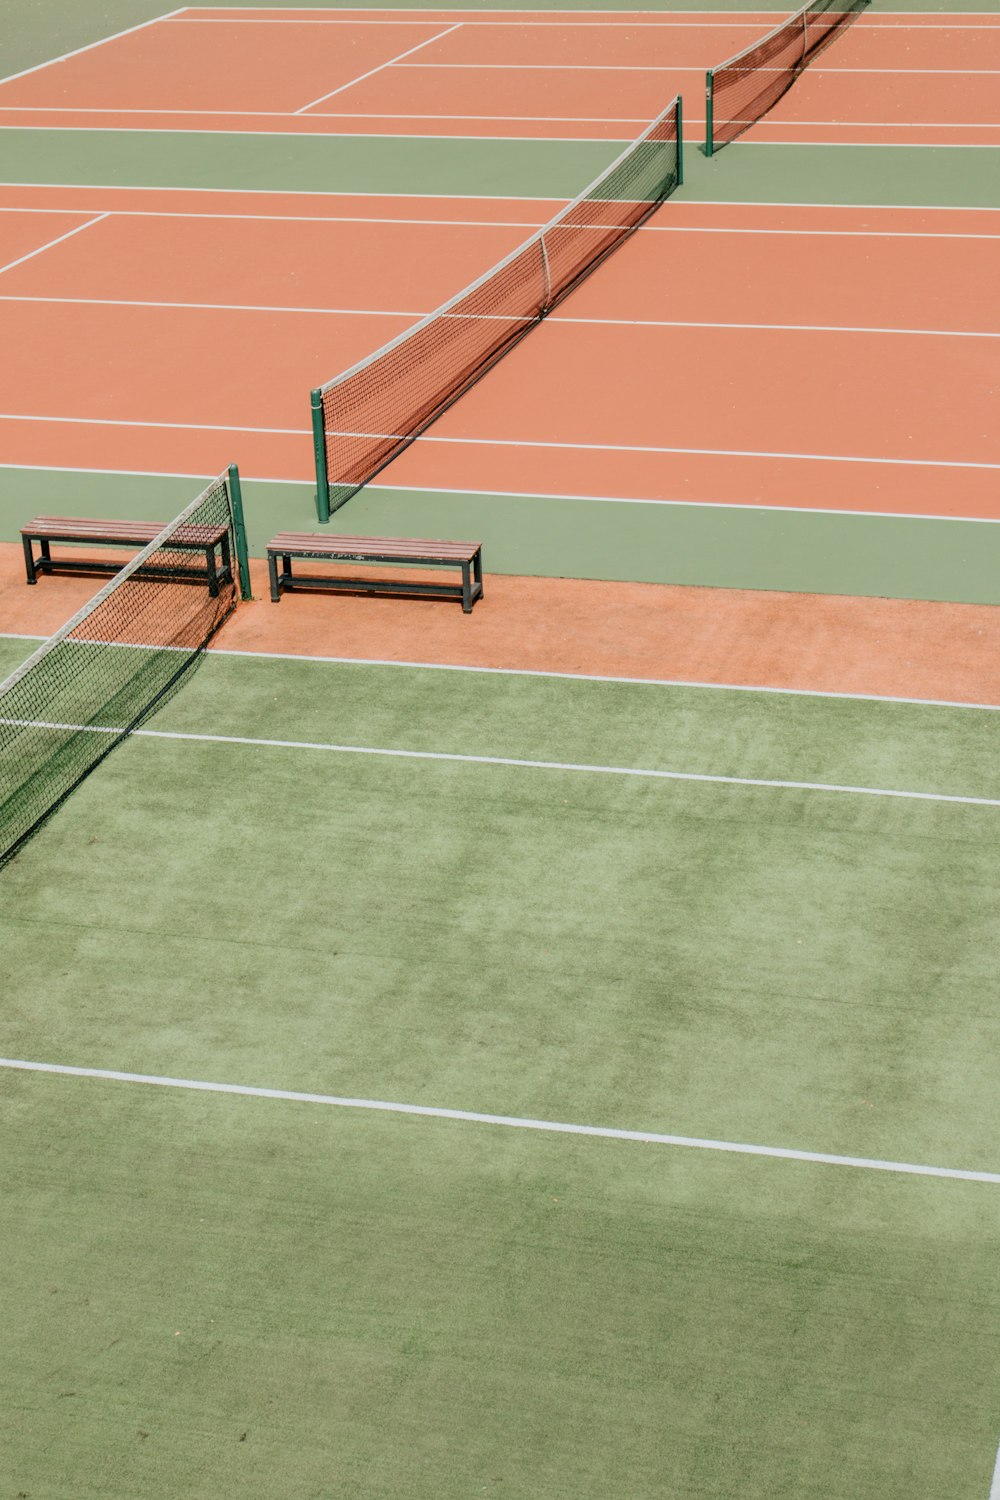 campi da tennis verdi e arancioni vuoti